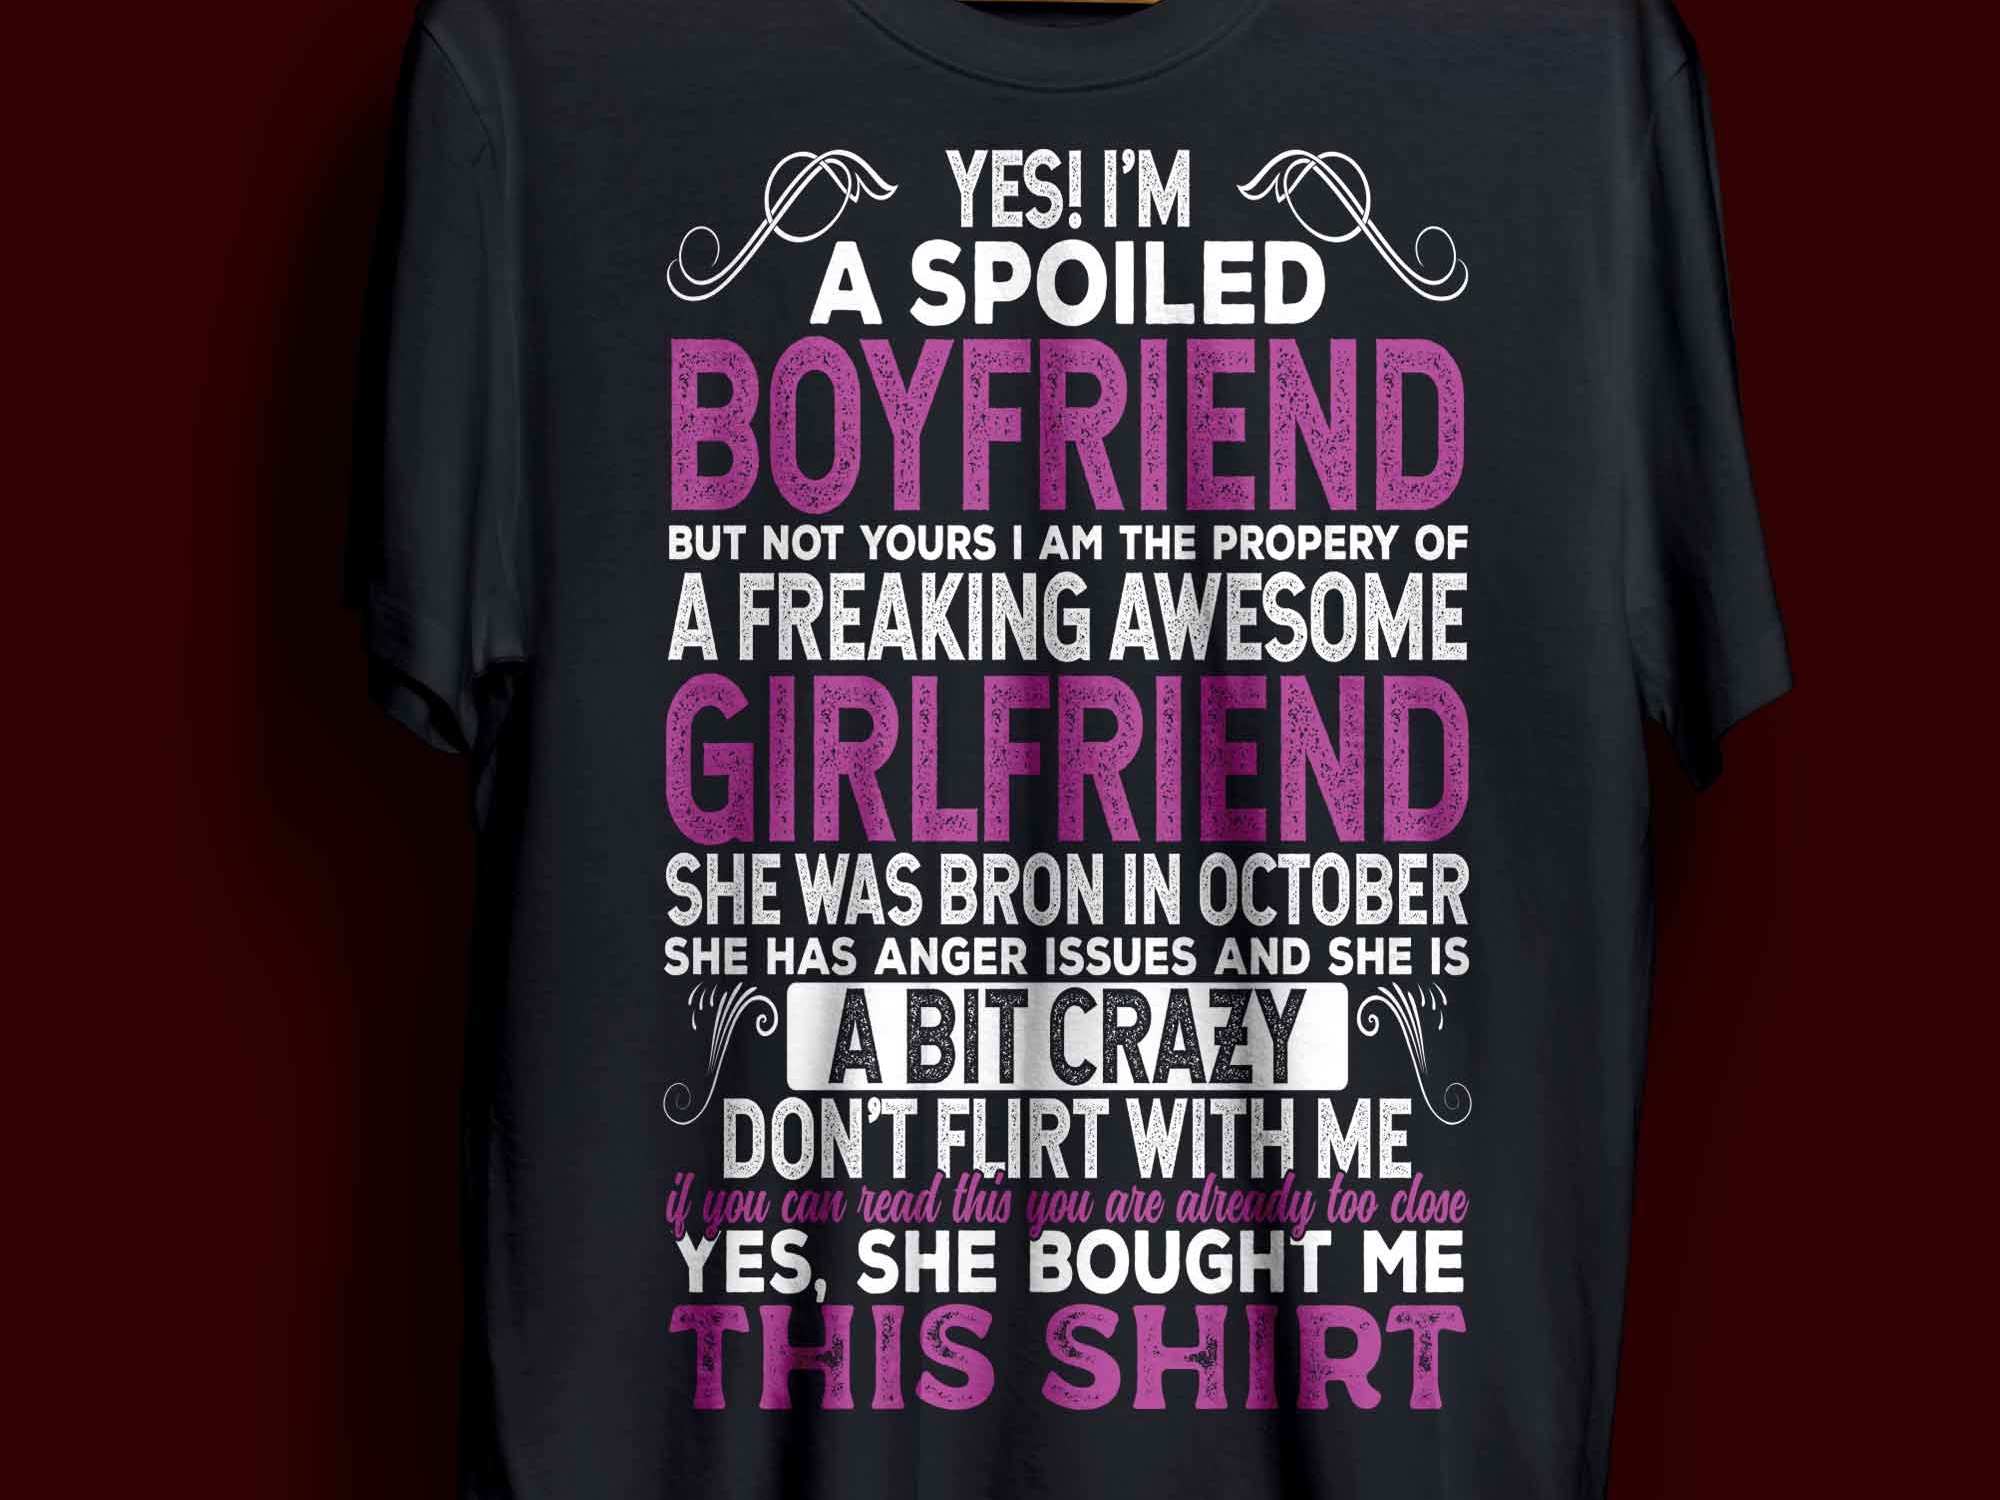 boyfriend t-shirt design by Eausuf Ali on Dribbble